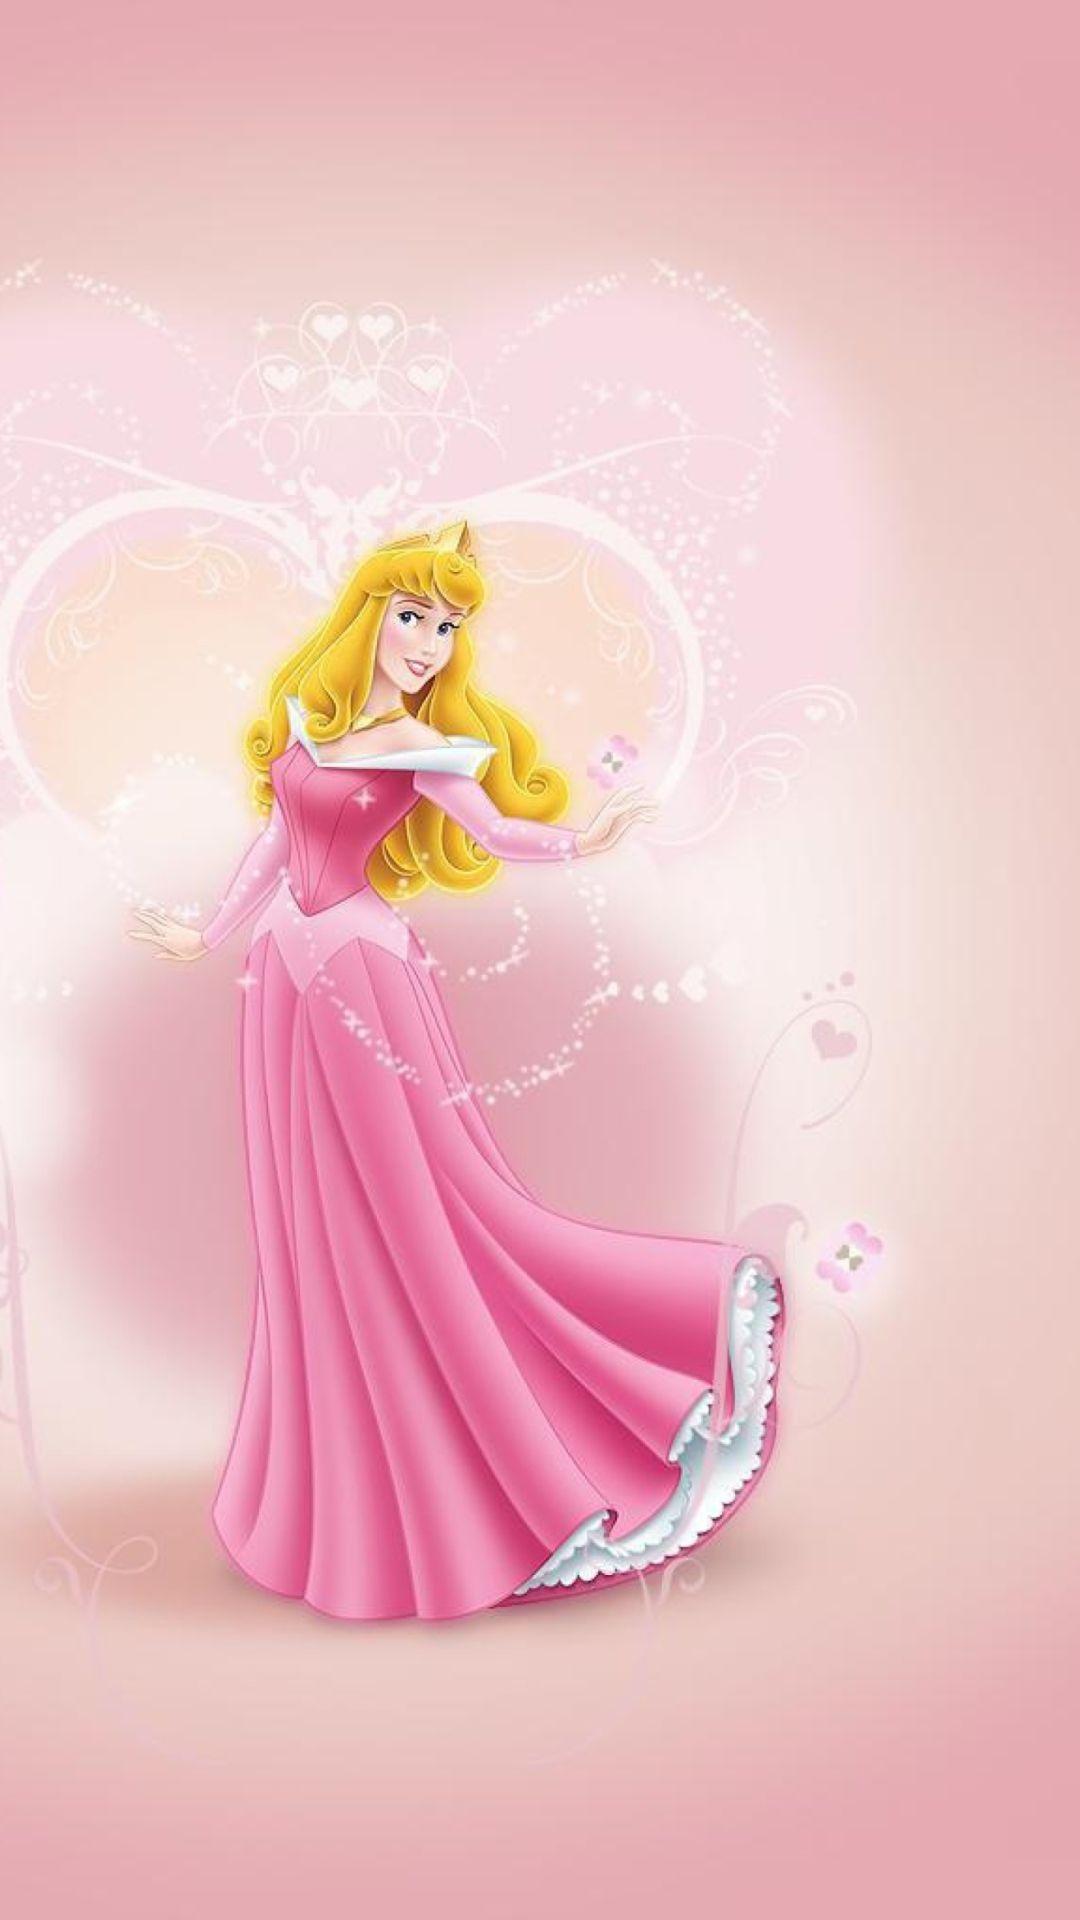 Wallpaper.wiki Princess Aurora Disney IPhone Wallpaper PIC WPD003469